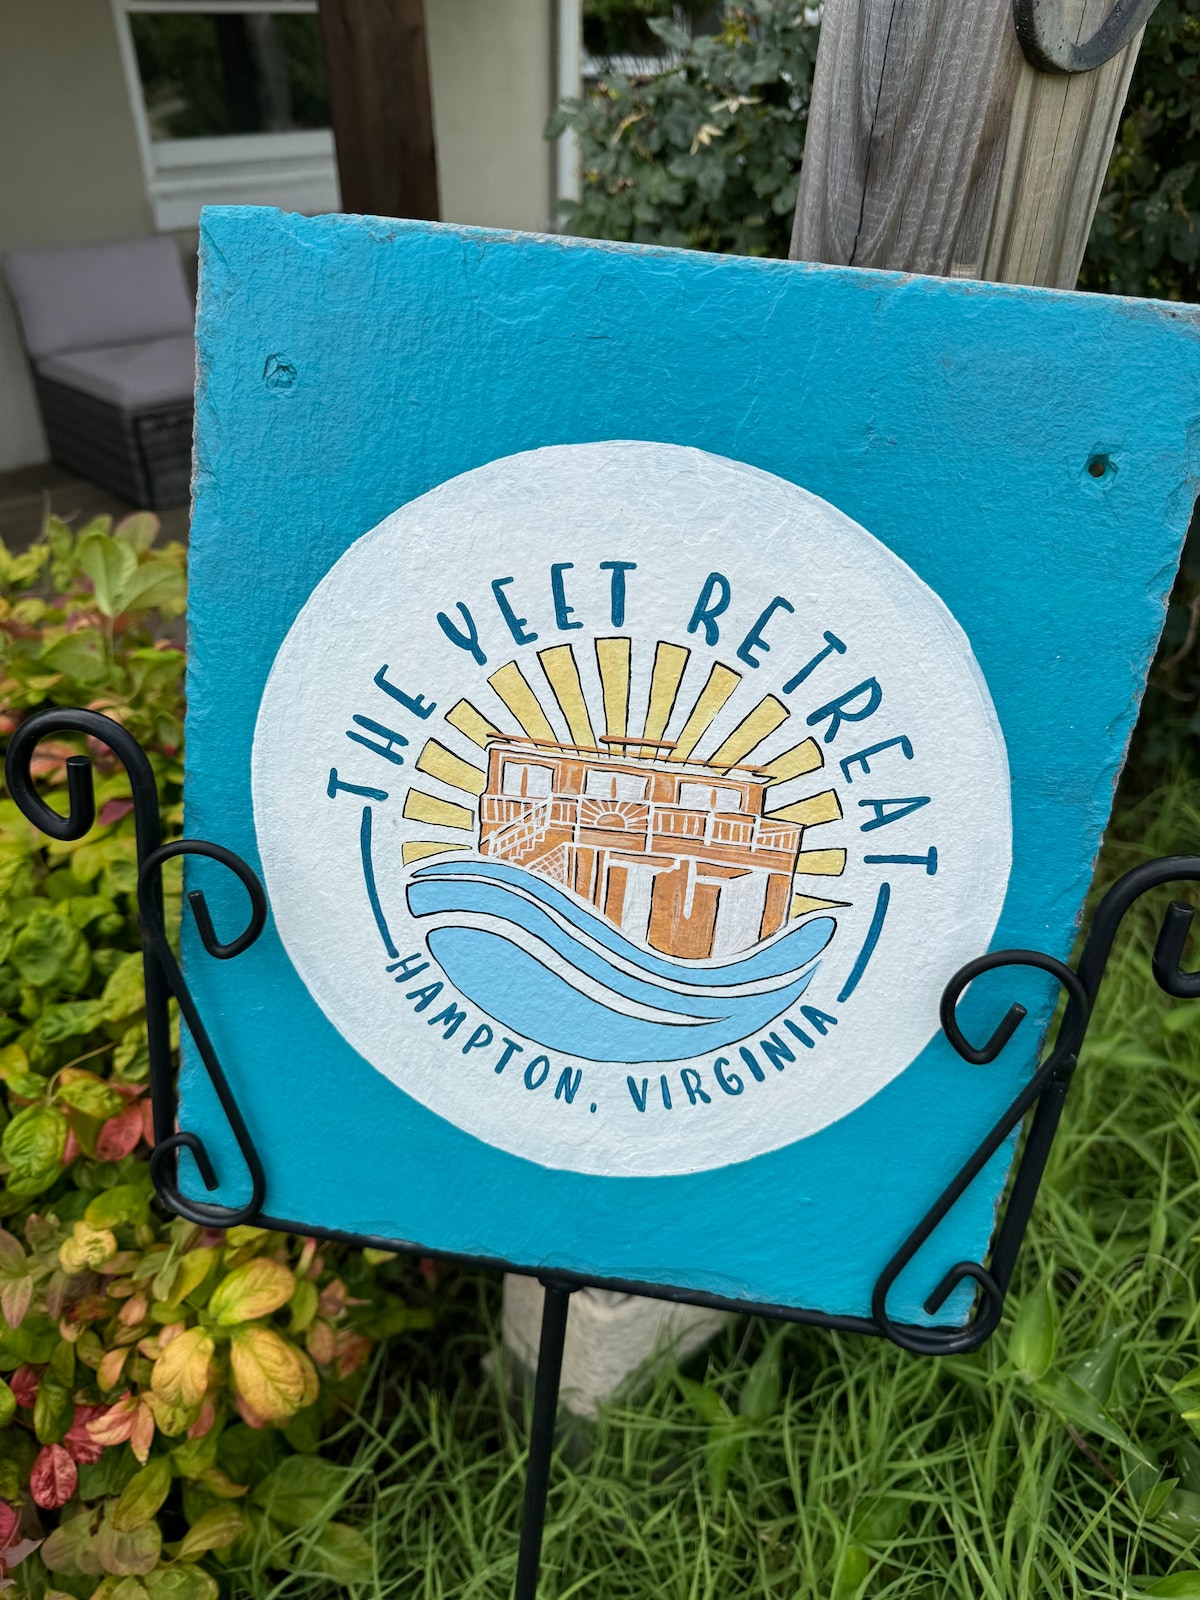 The Yeet Retreat: Water View at Grandview Island